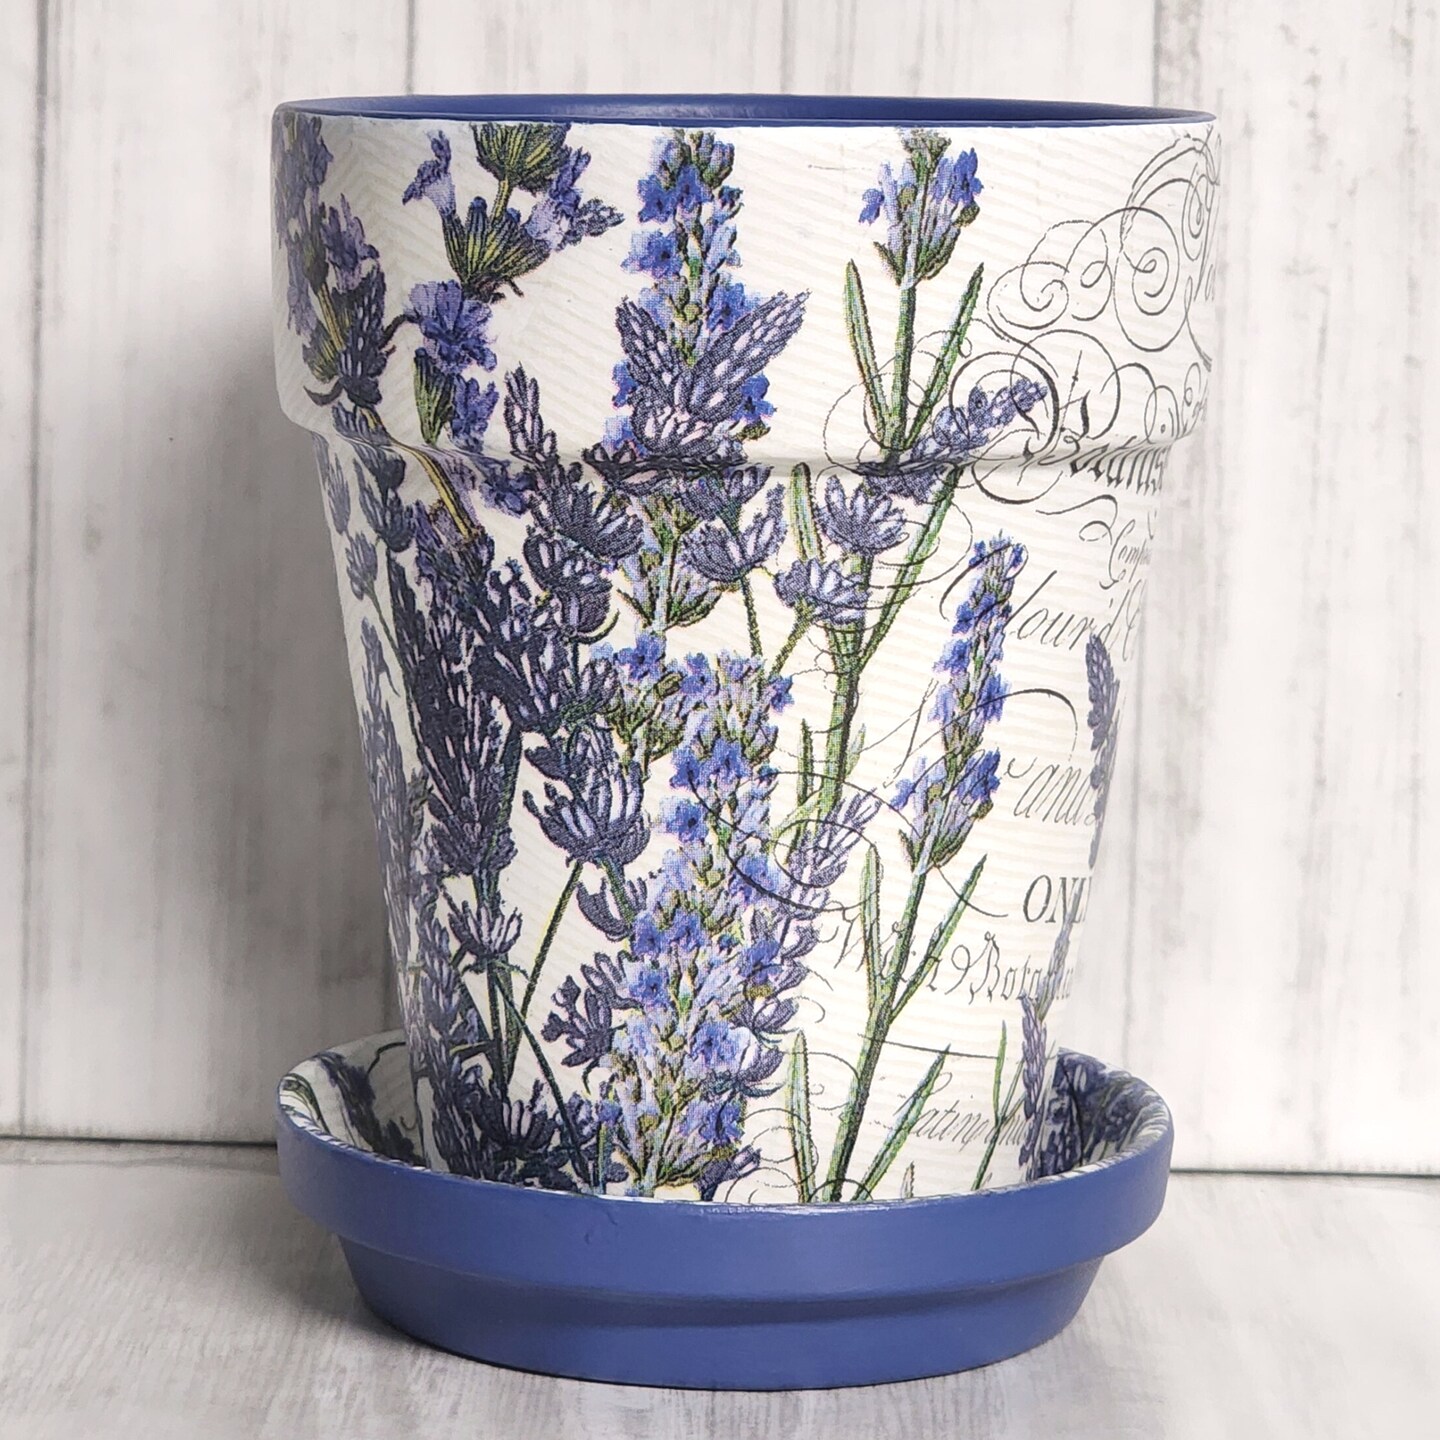 Vintage Terra Cotta Clay Pot. 4.5 Inches. Flower Pot Planter